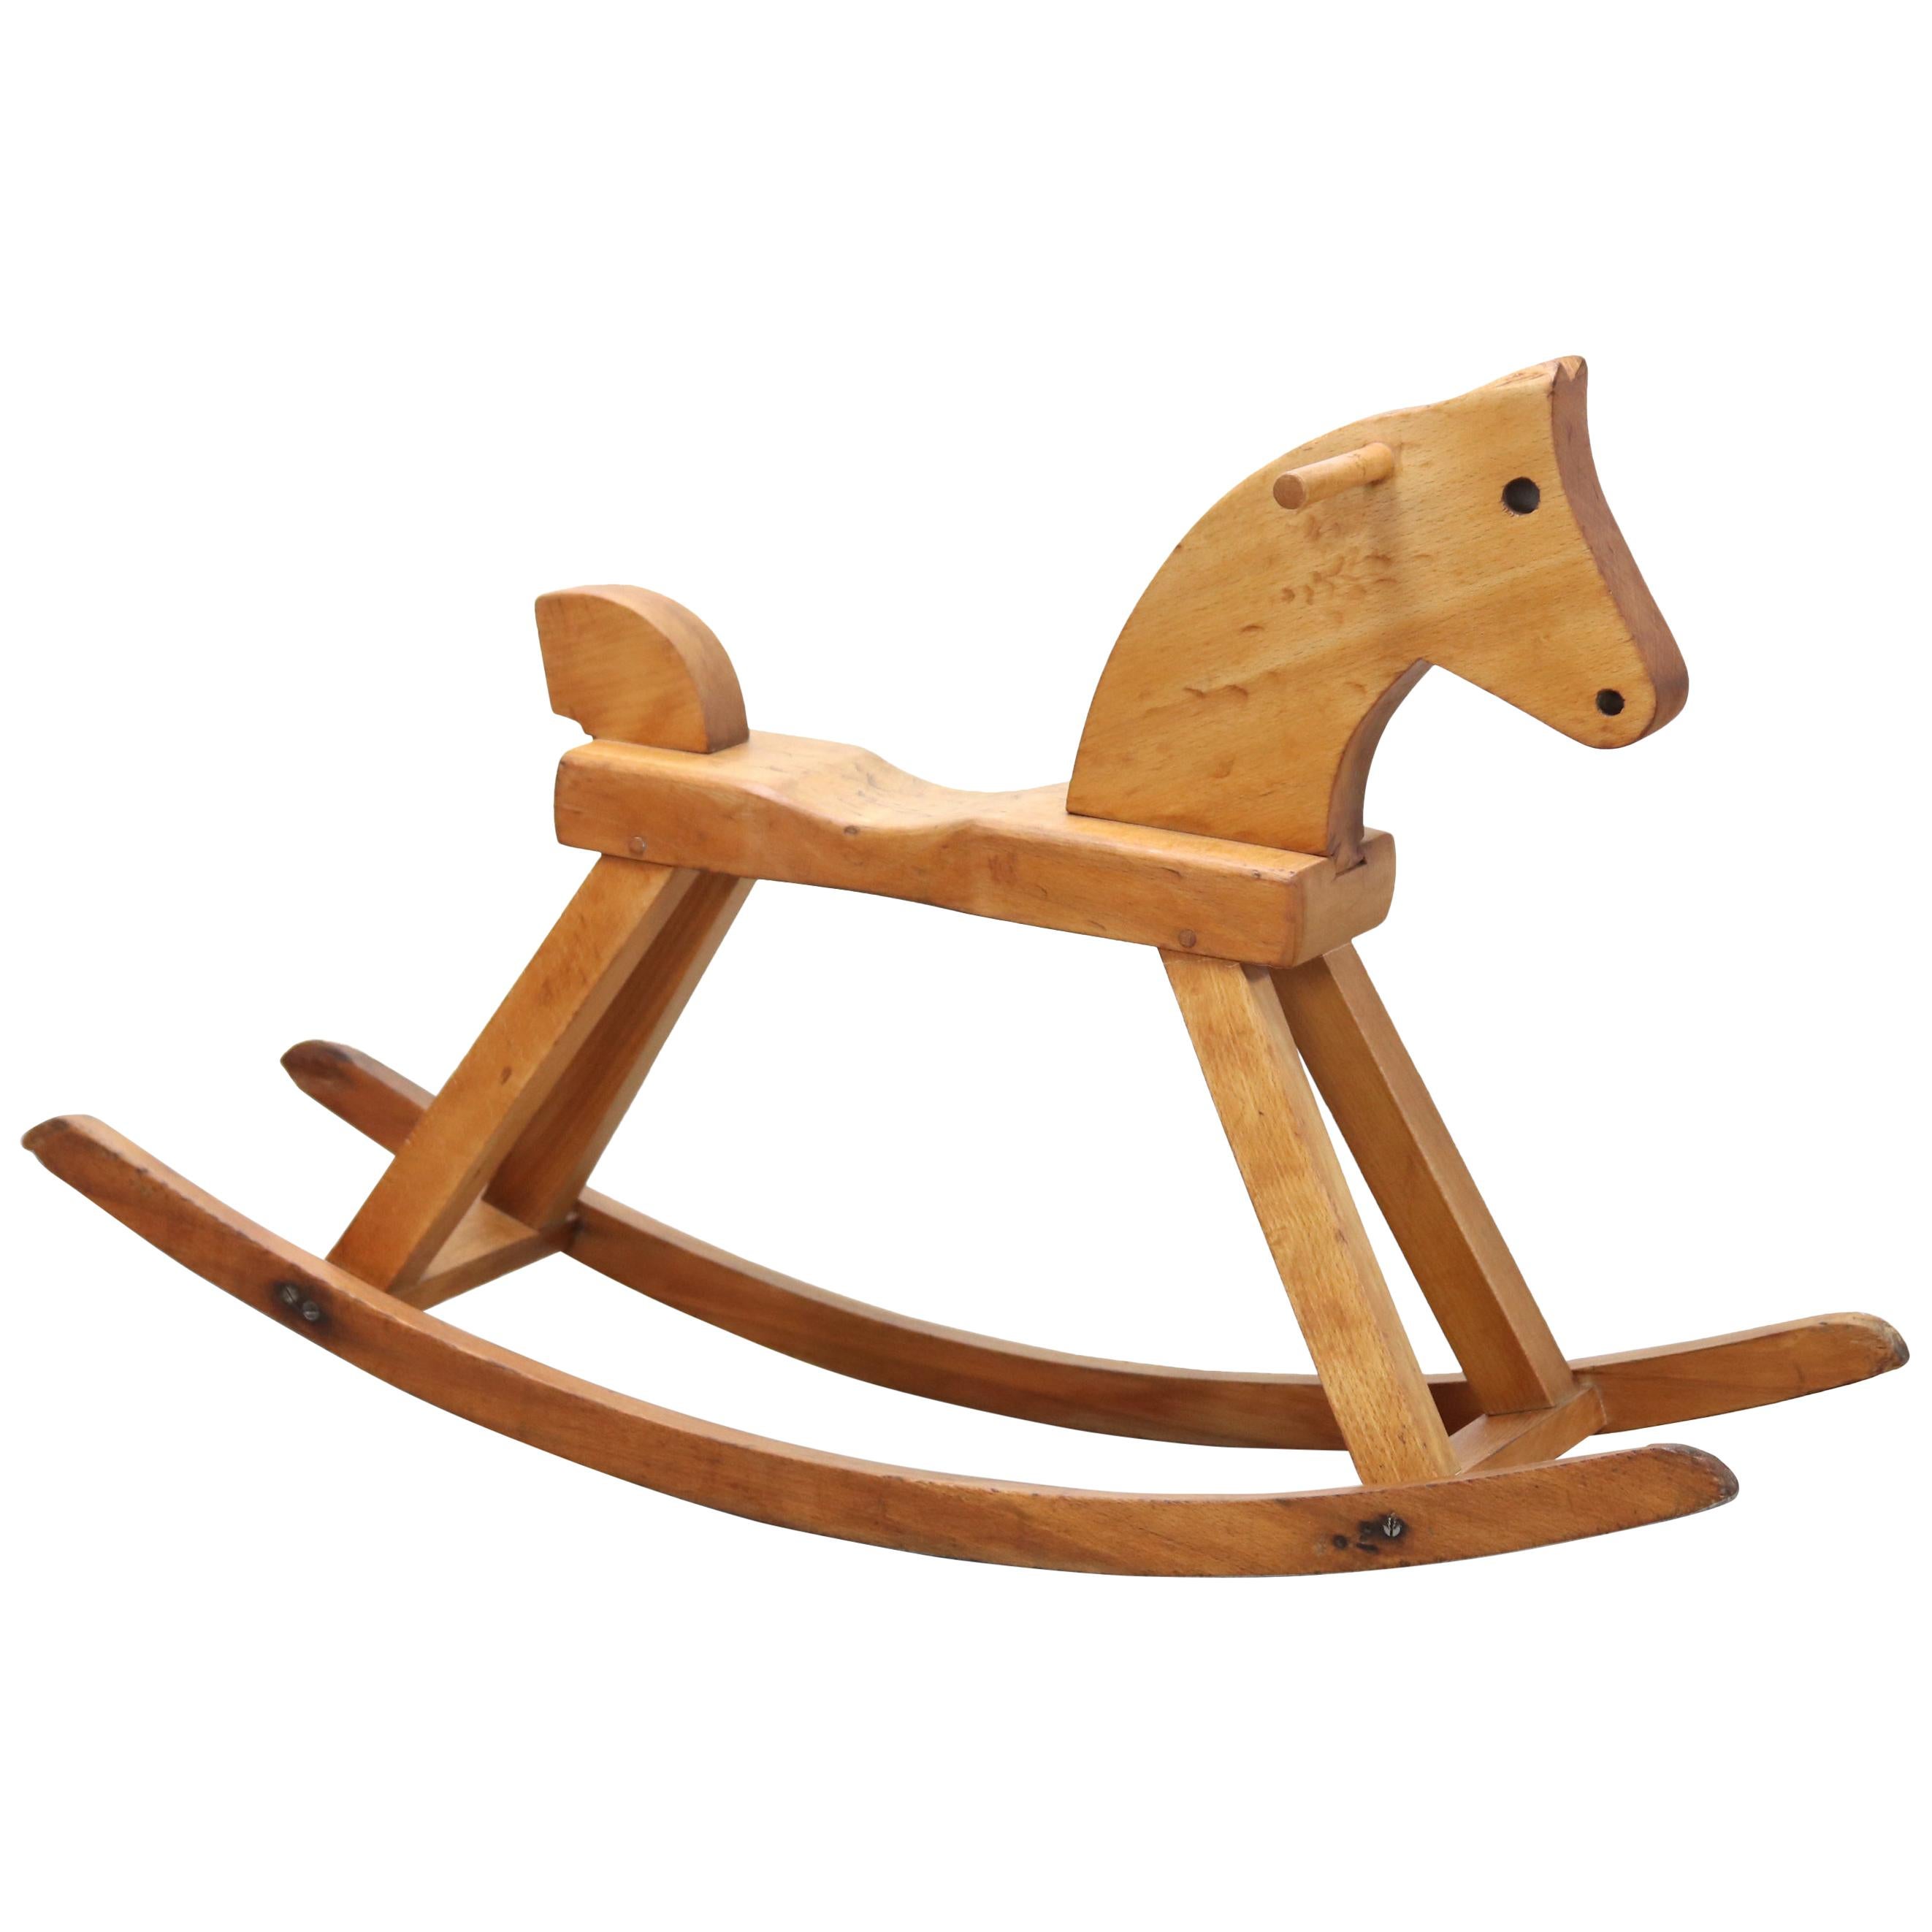 Vintage Kay Bojesen wooden Rocking Horse, Denmark, 1936